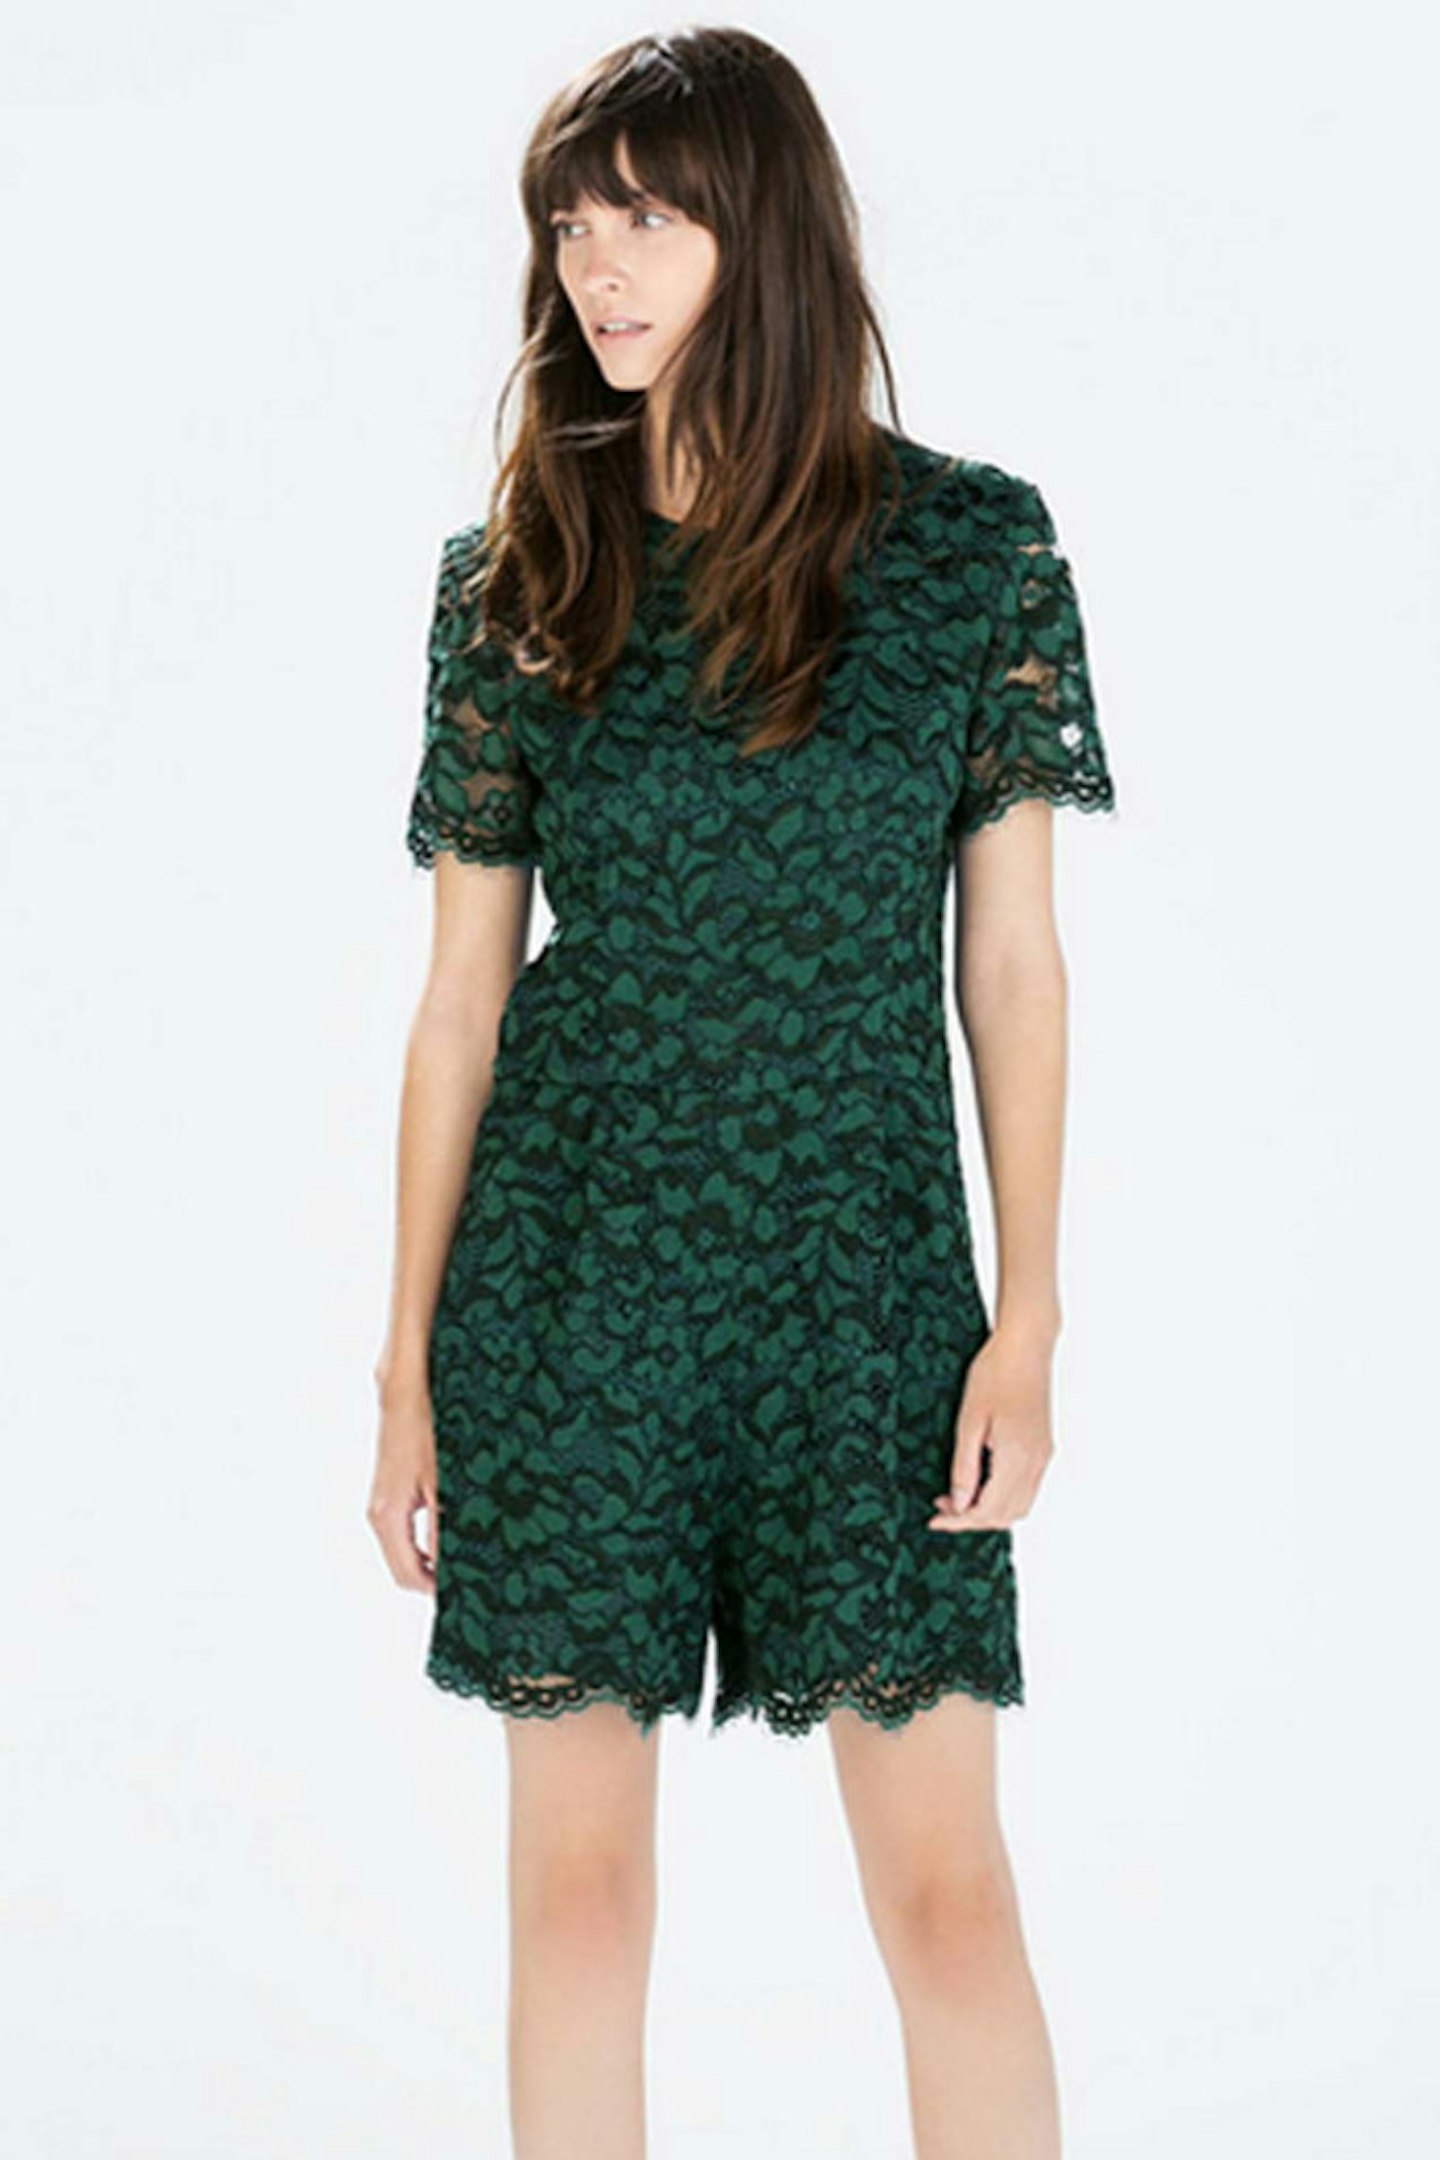 21. Green lace playsuit, £69.99, Zara